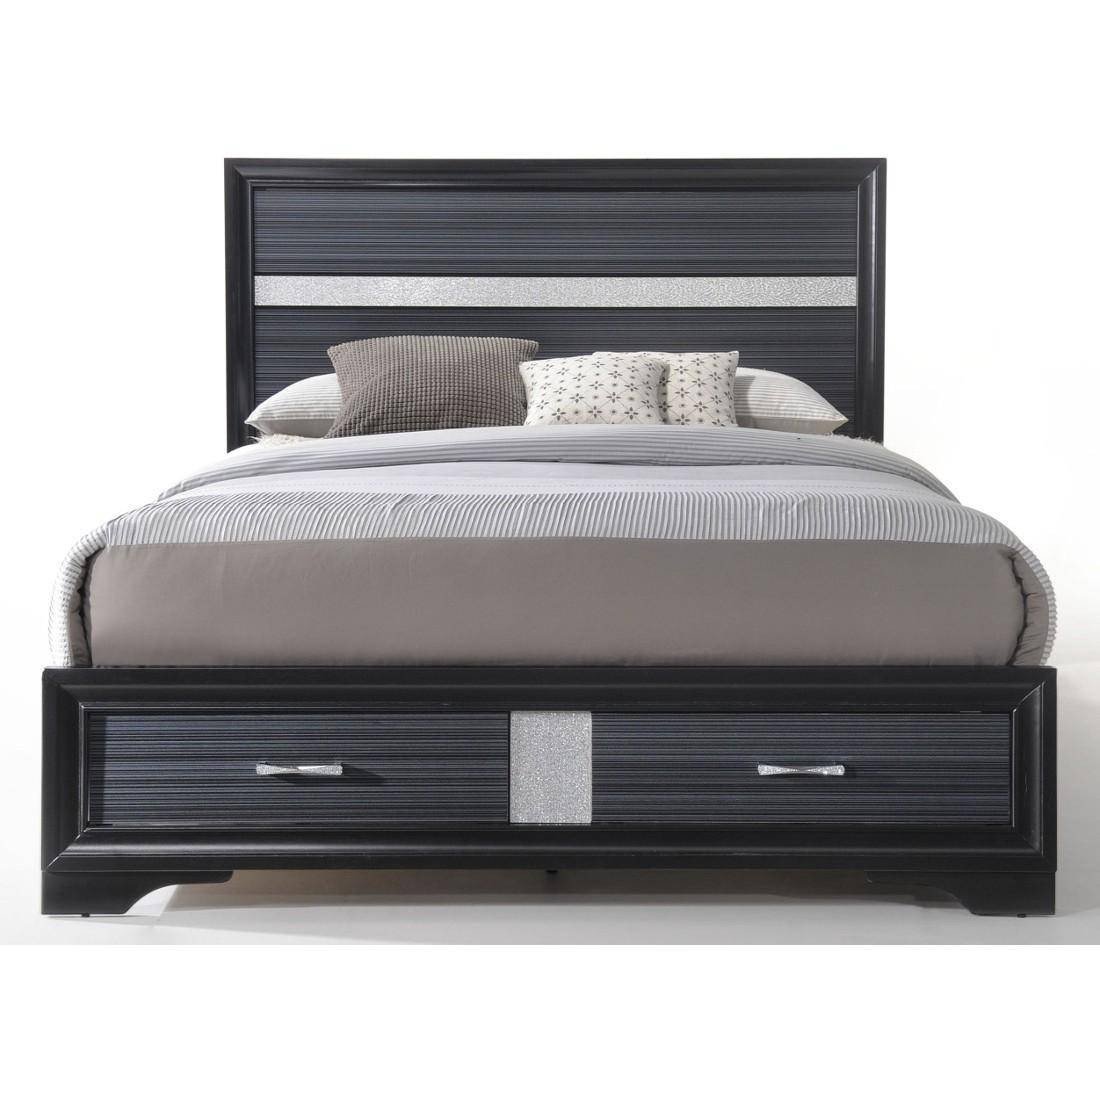 Acme Furniture Bedroom Set Inspirational Black Wood Queen Storage Bedroom Set 4pcs Naima Q Acme